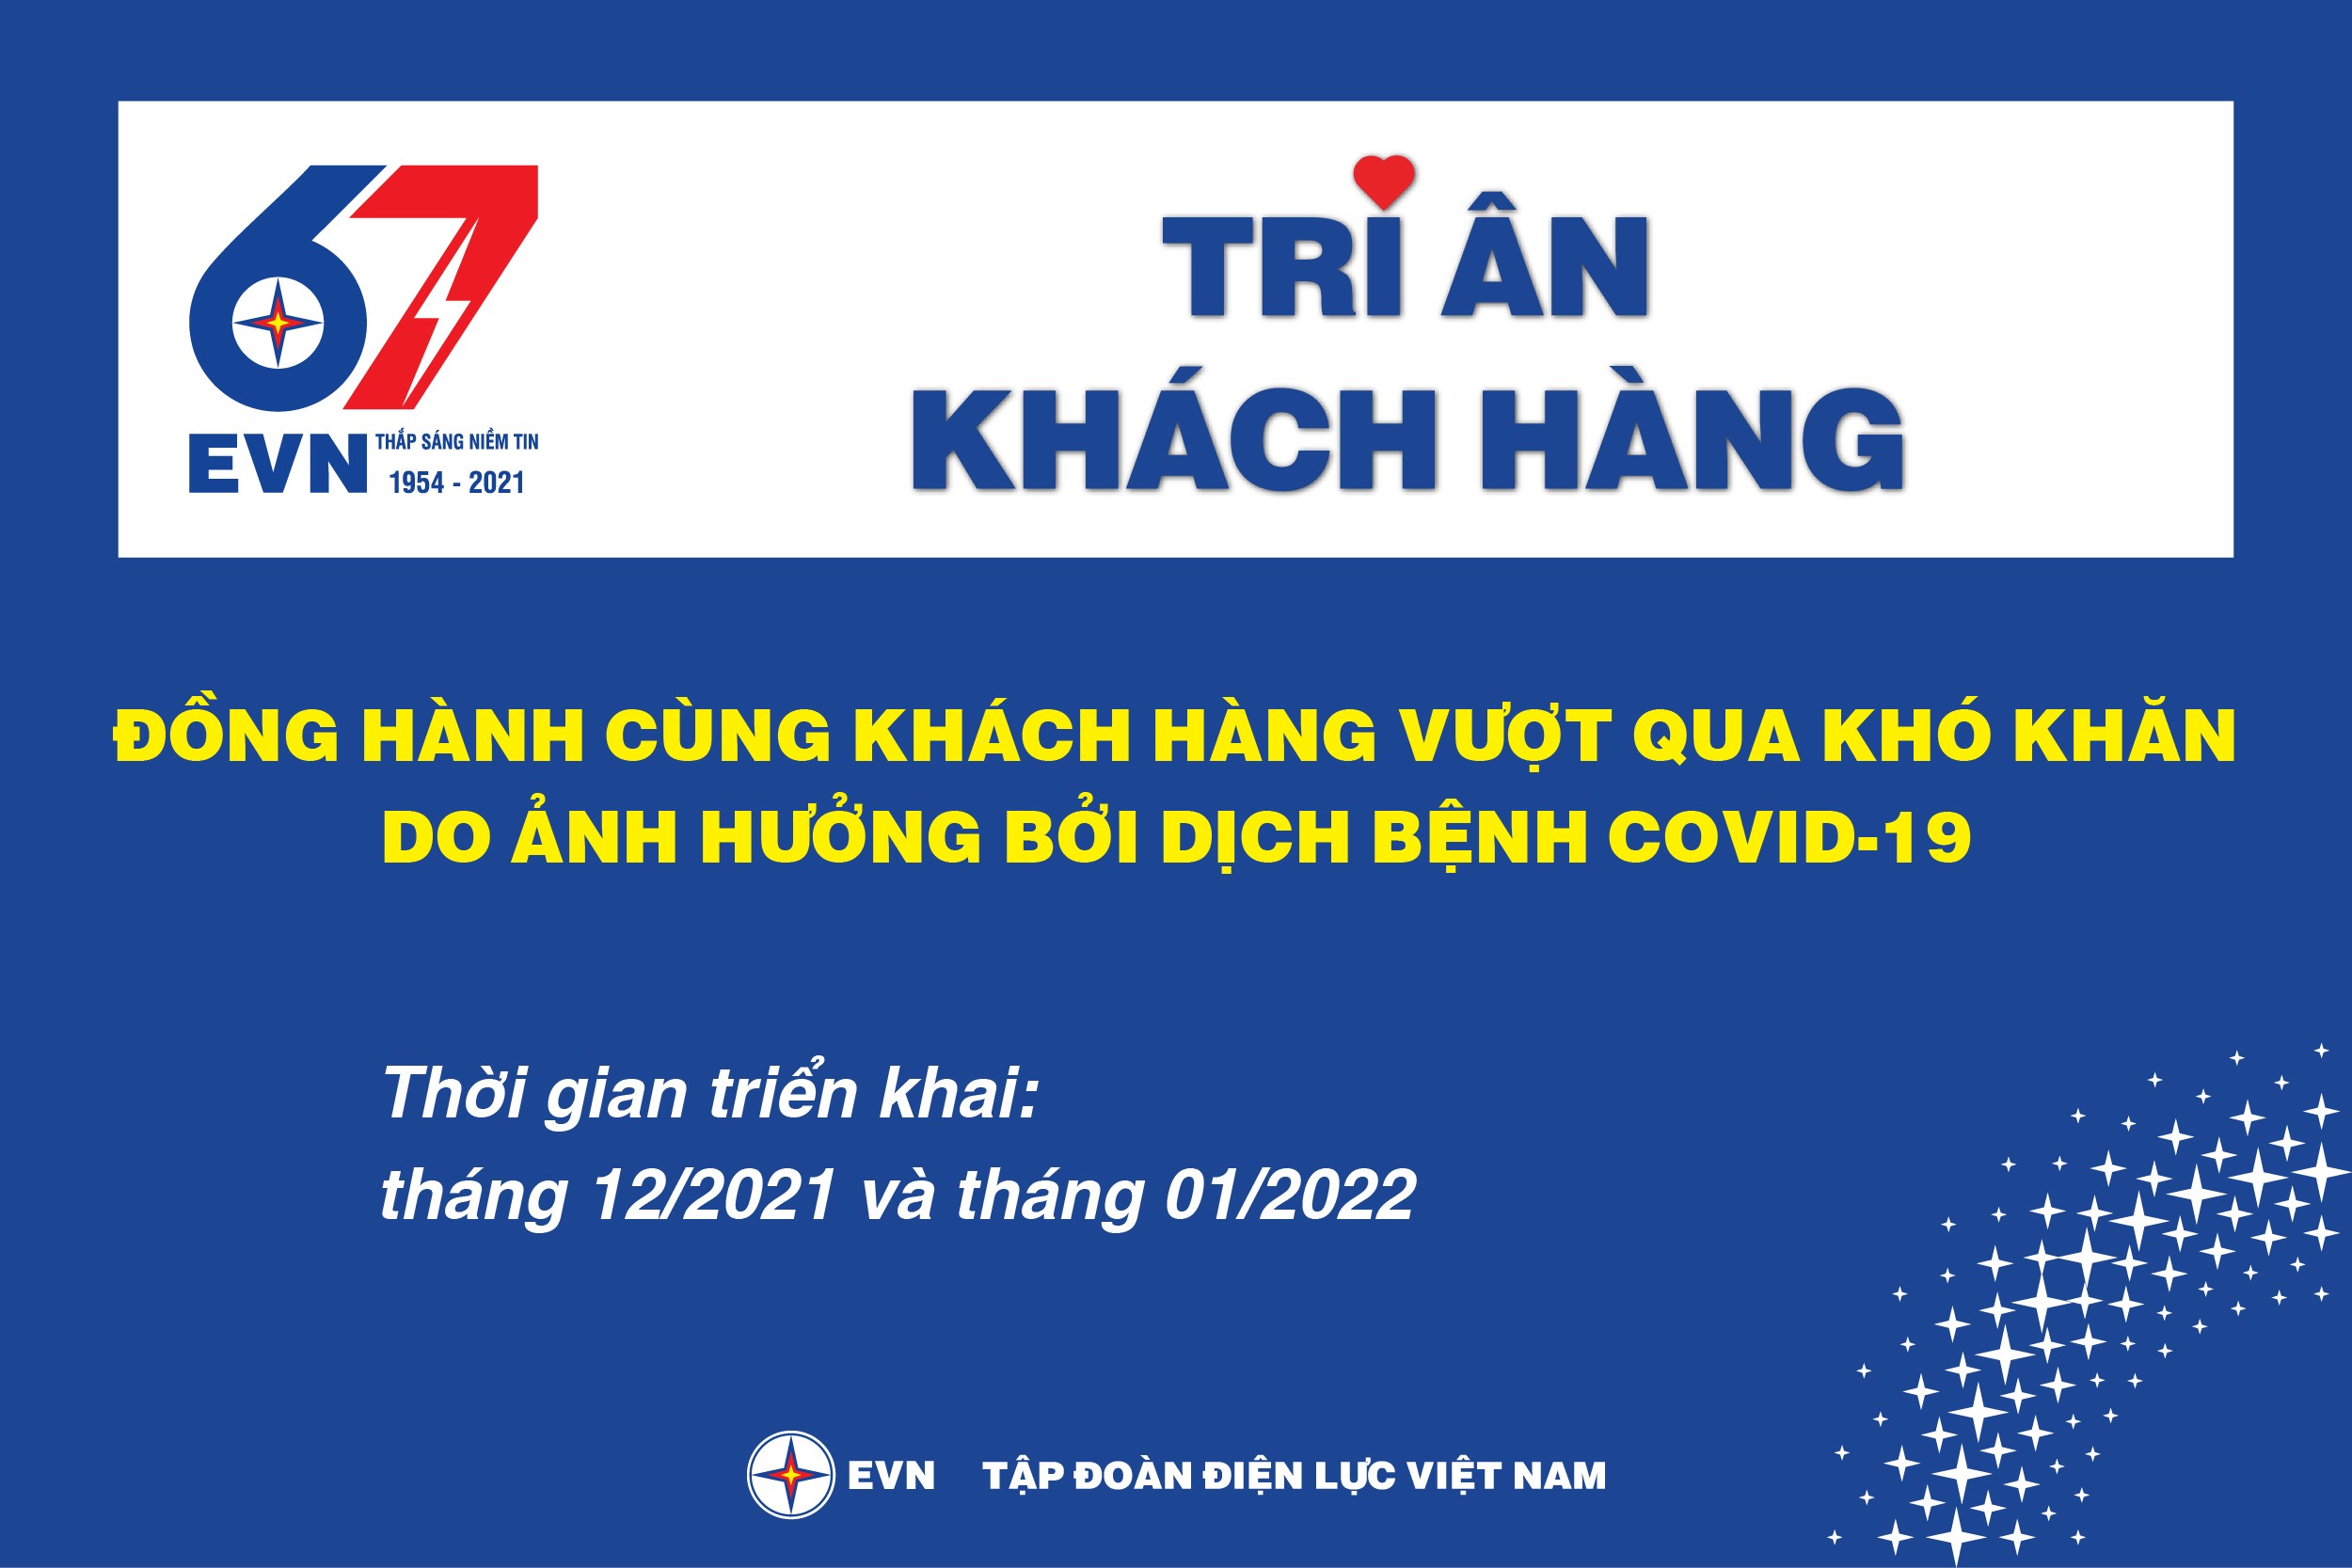 banner-thang-tri-an-khach-hang-2021-2-1638234299.jpg